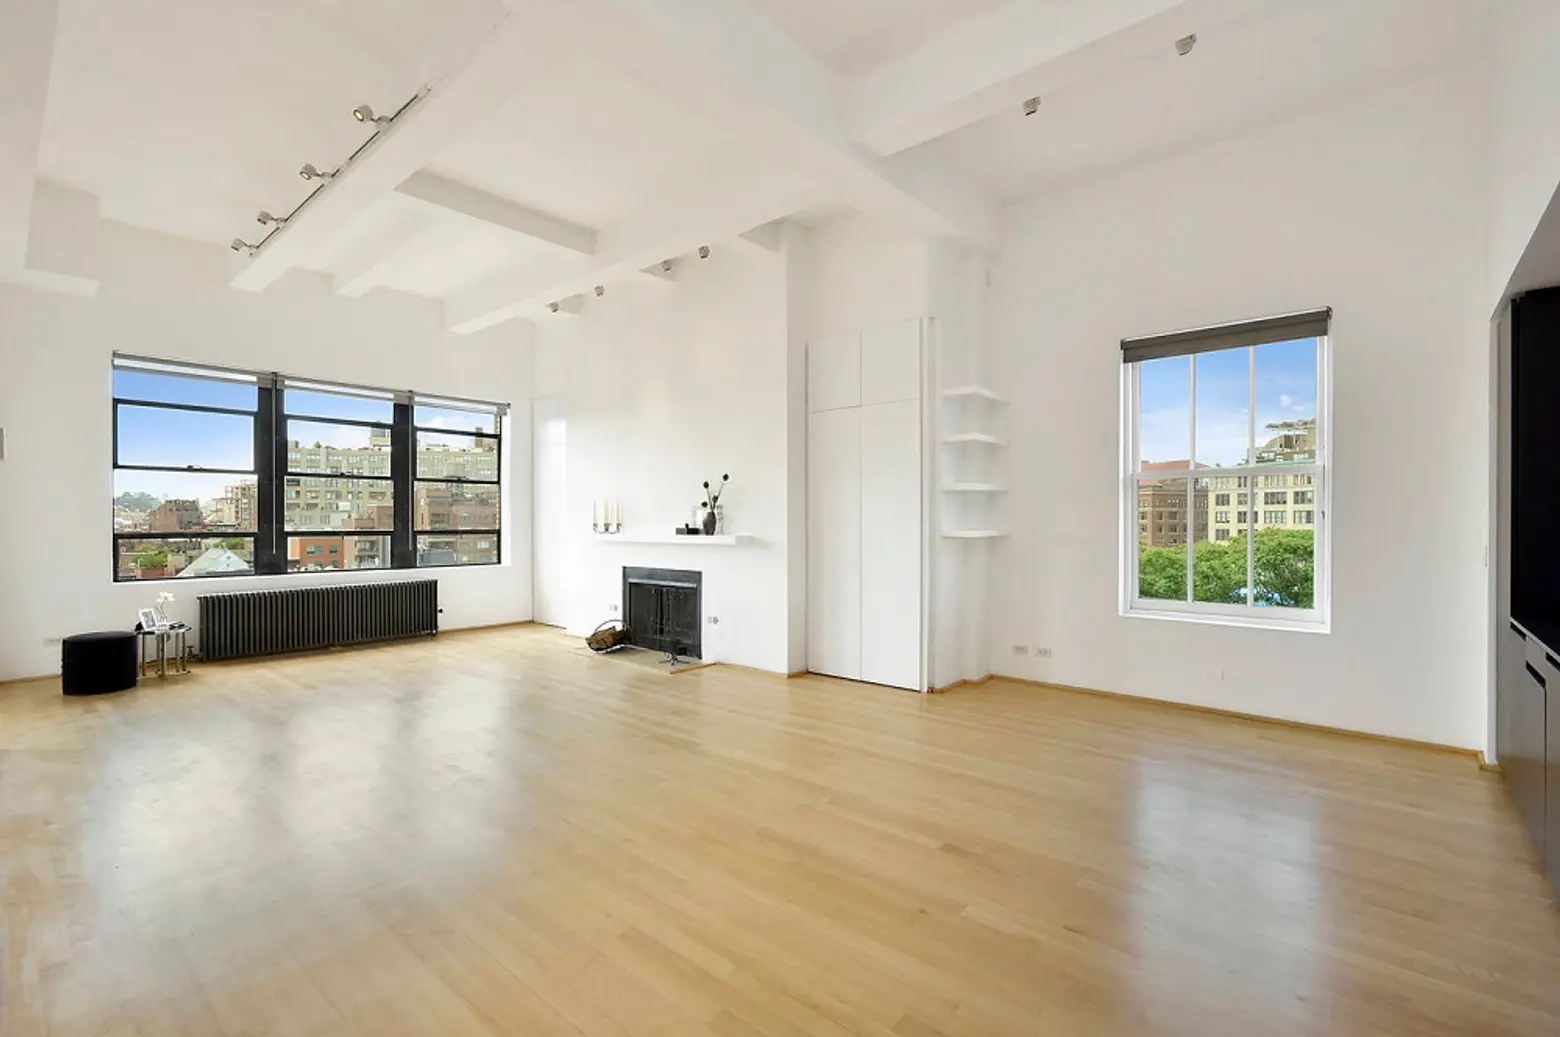 Robert De Niro Buys $2.8M West Village Apartment